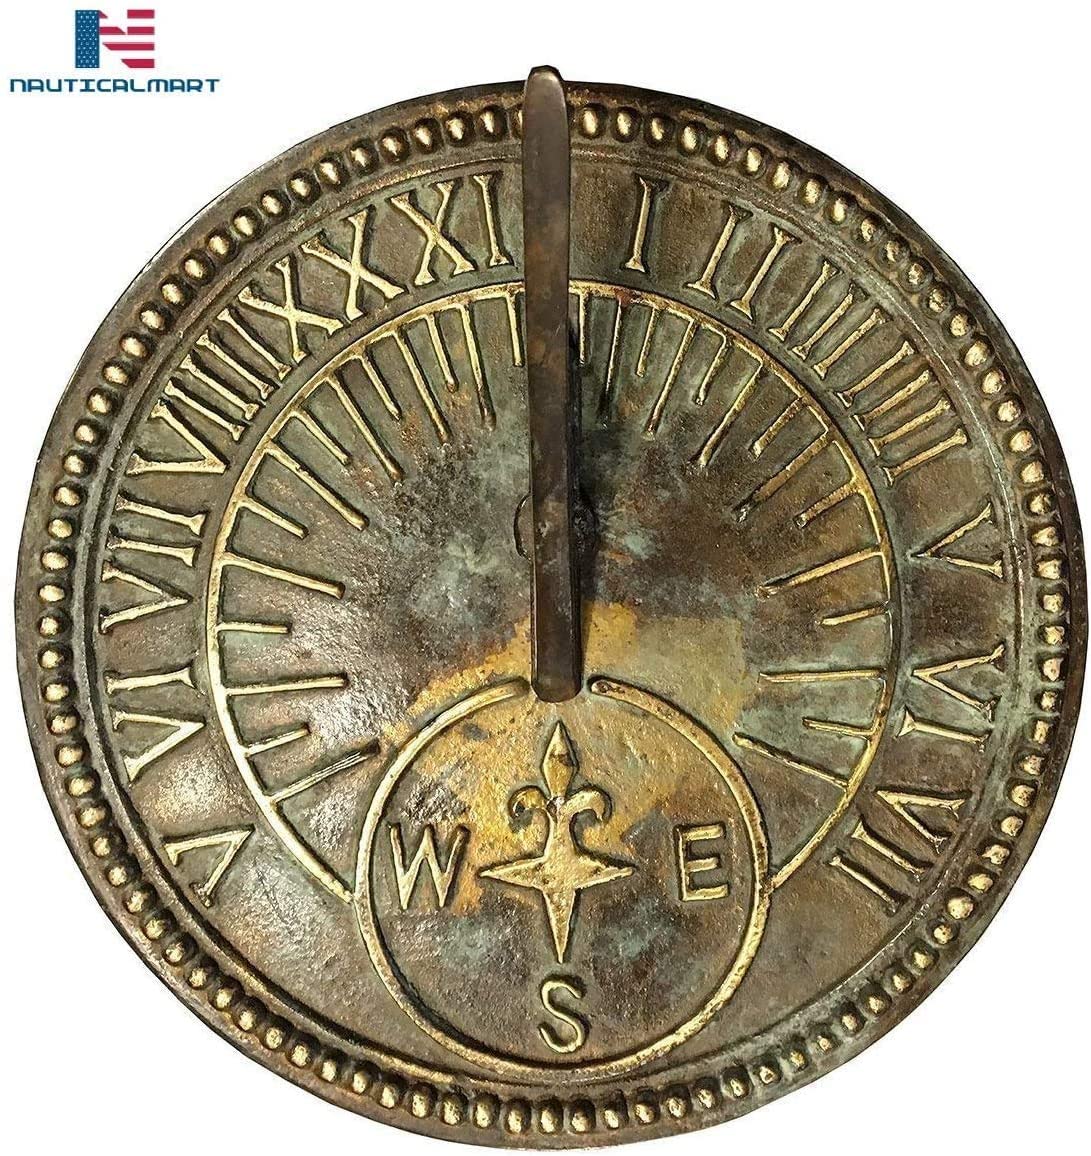 NauticalMart Roman Sundial, Solid Brass with Light Verdi Highlights, 8-Inch Diameter - image 2 of 4